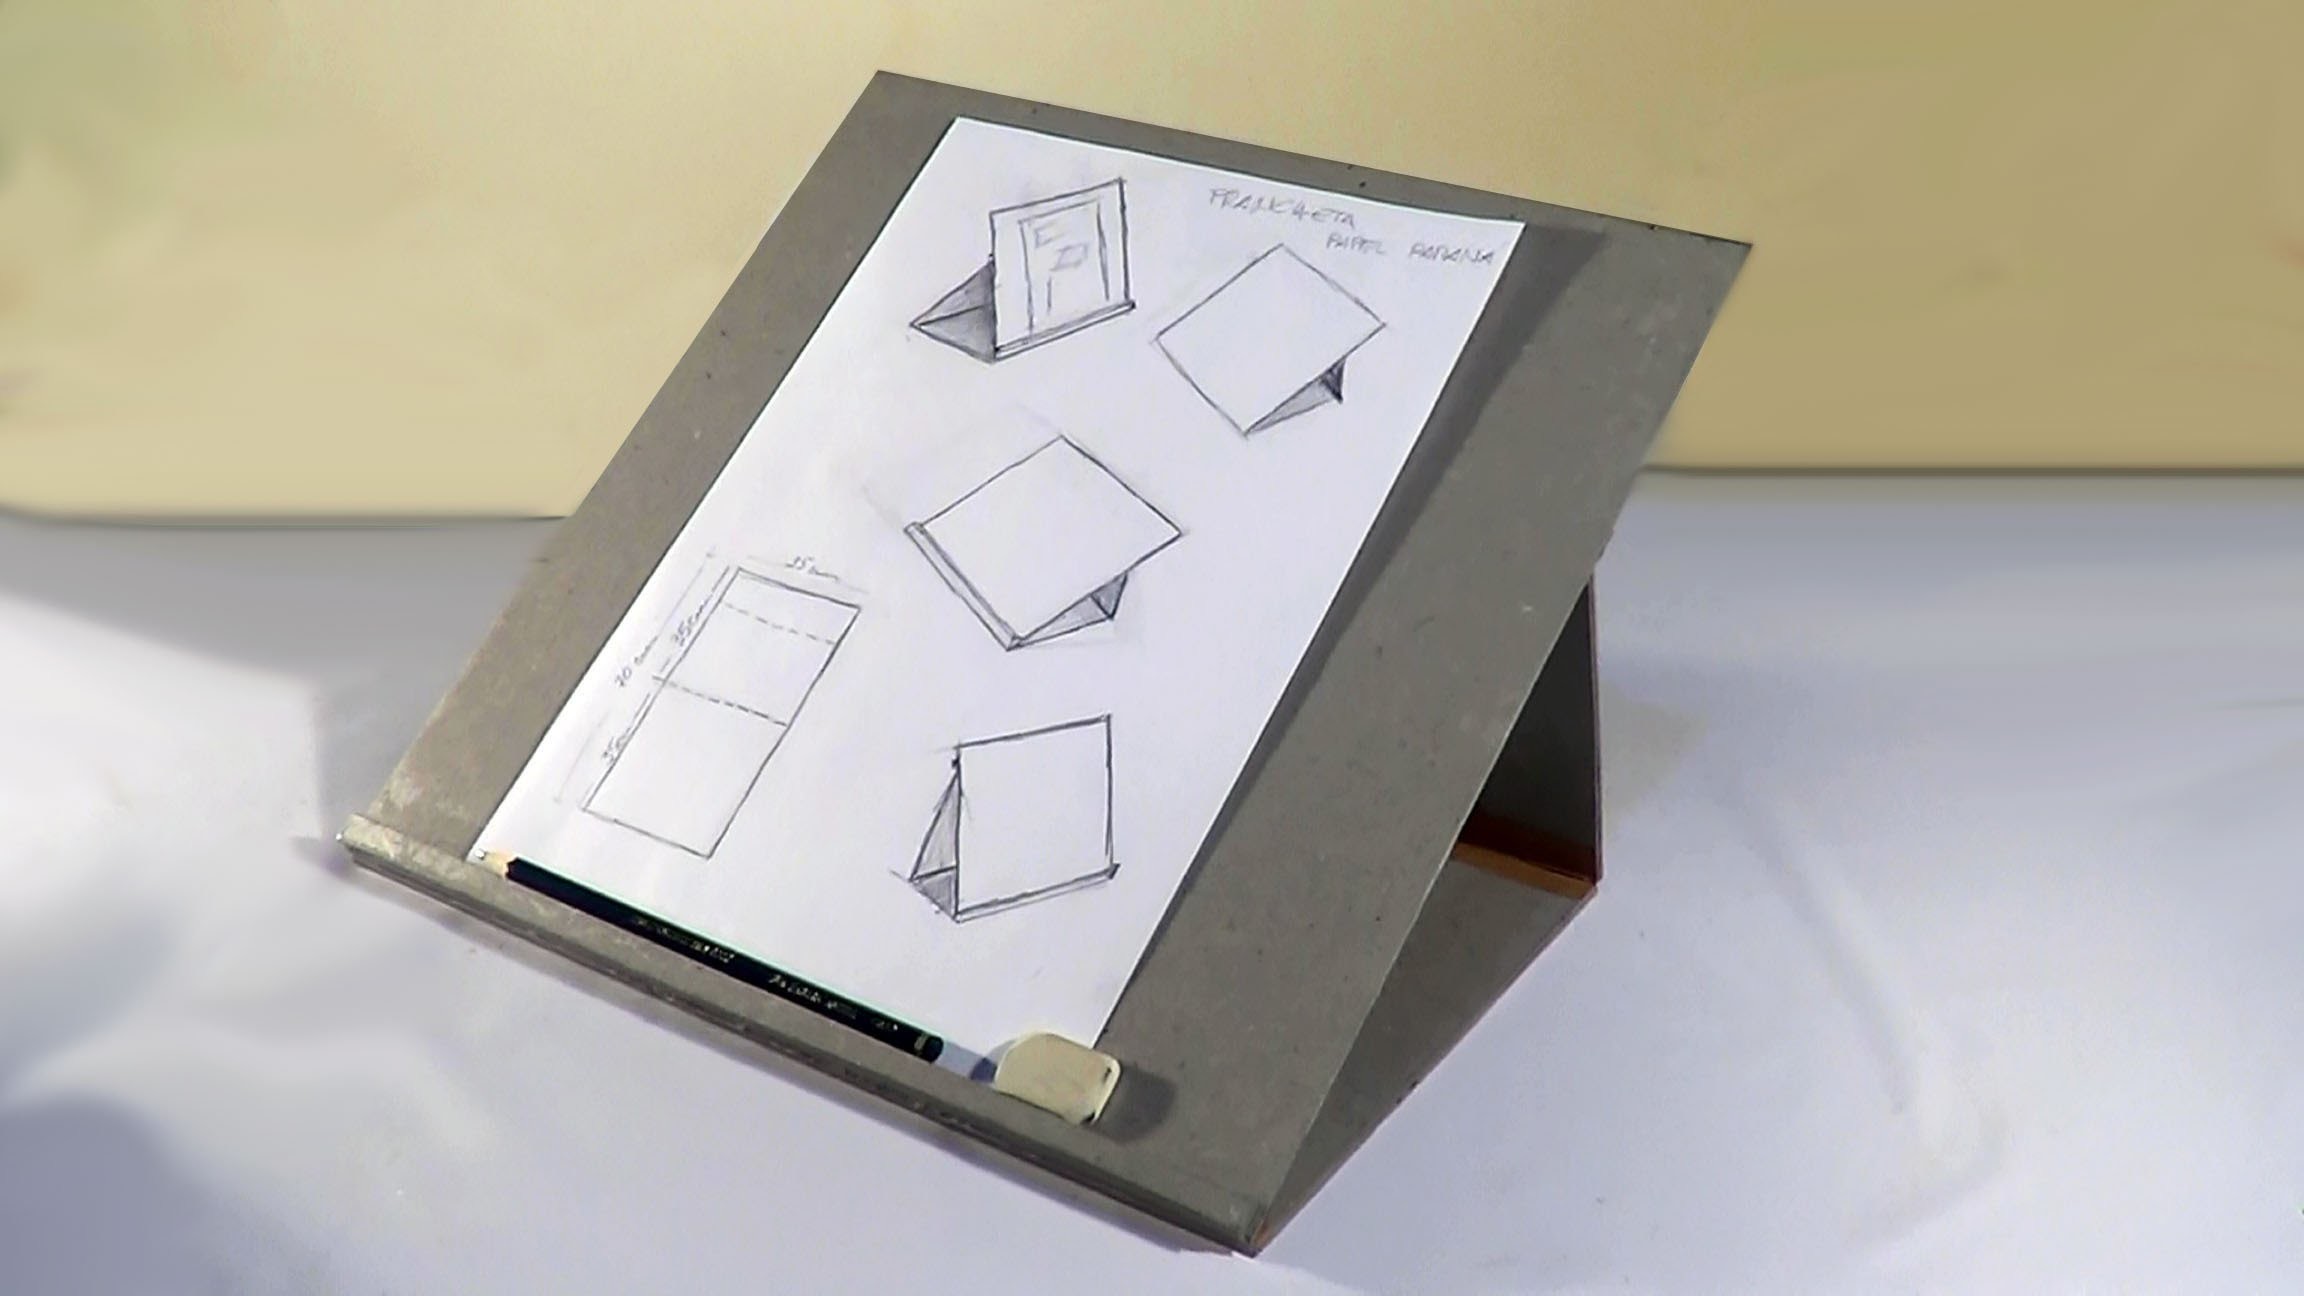 Prancheta de desenho (papelão) - Drawing board (cardboard) - Tablero de dibujo (de cartón)